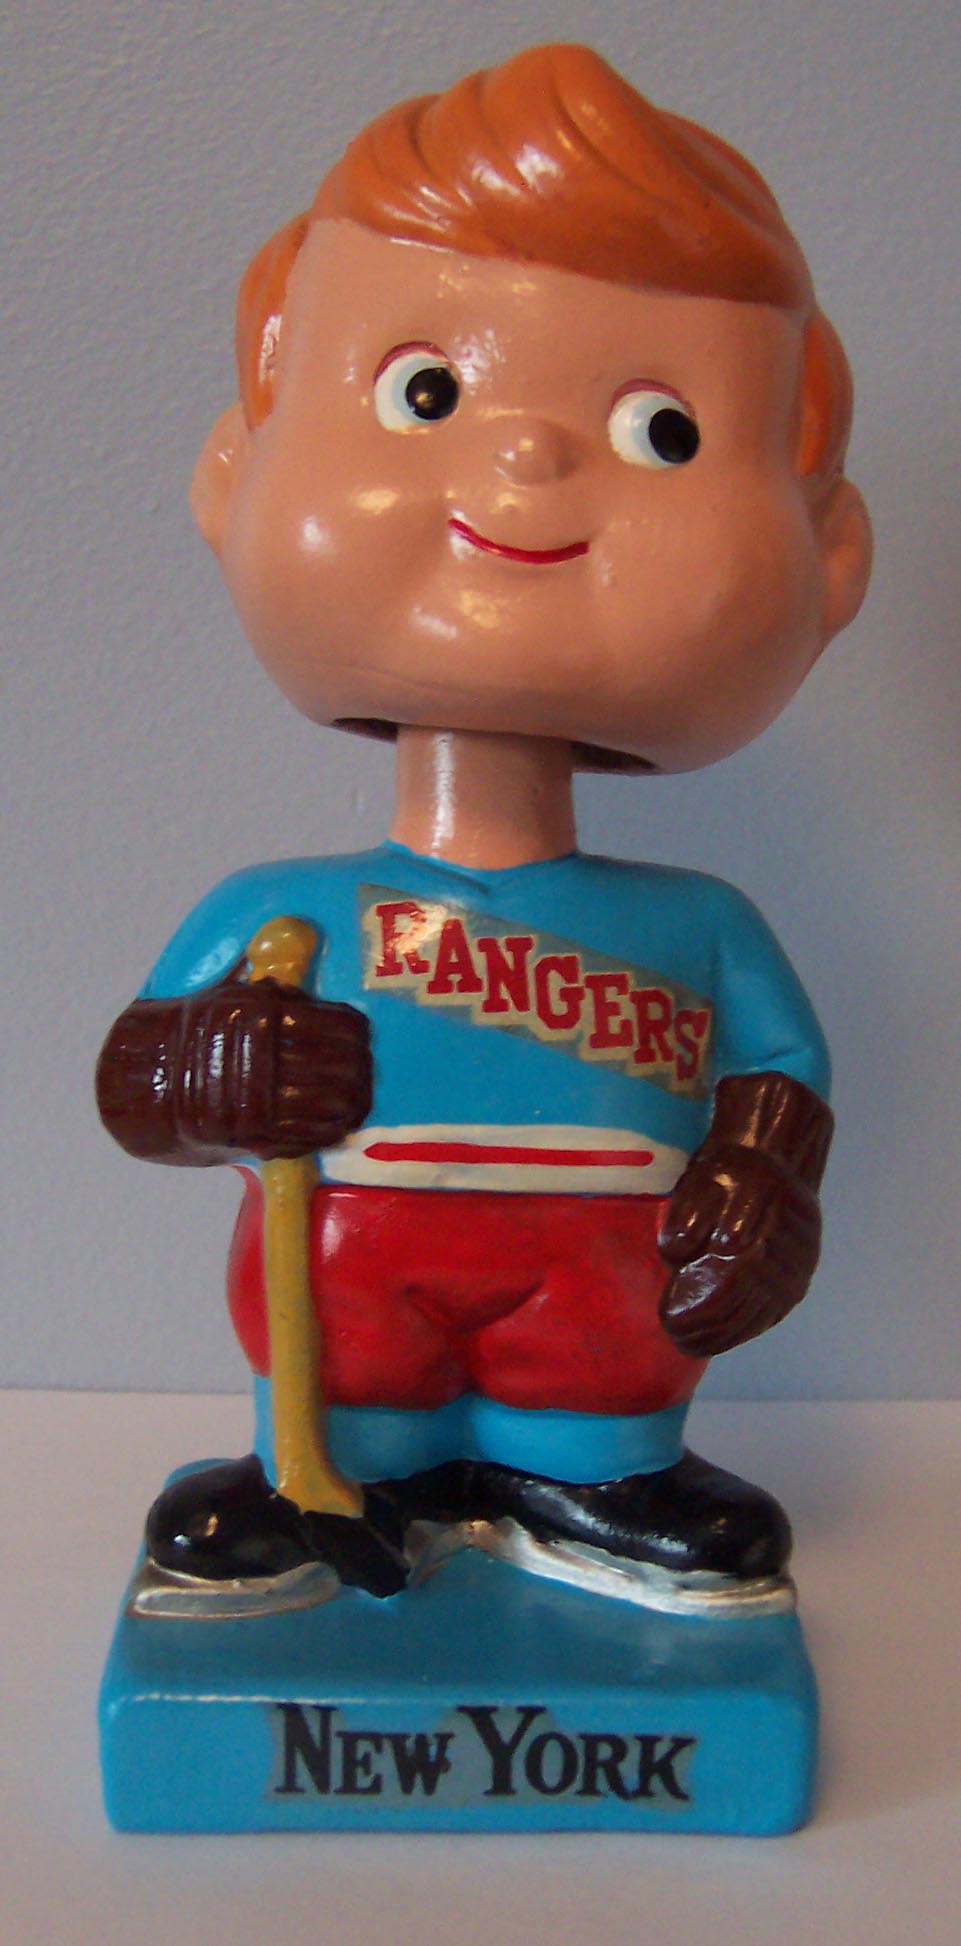 New_York_Rangers doll